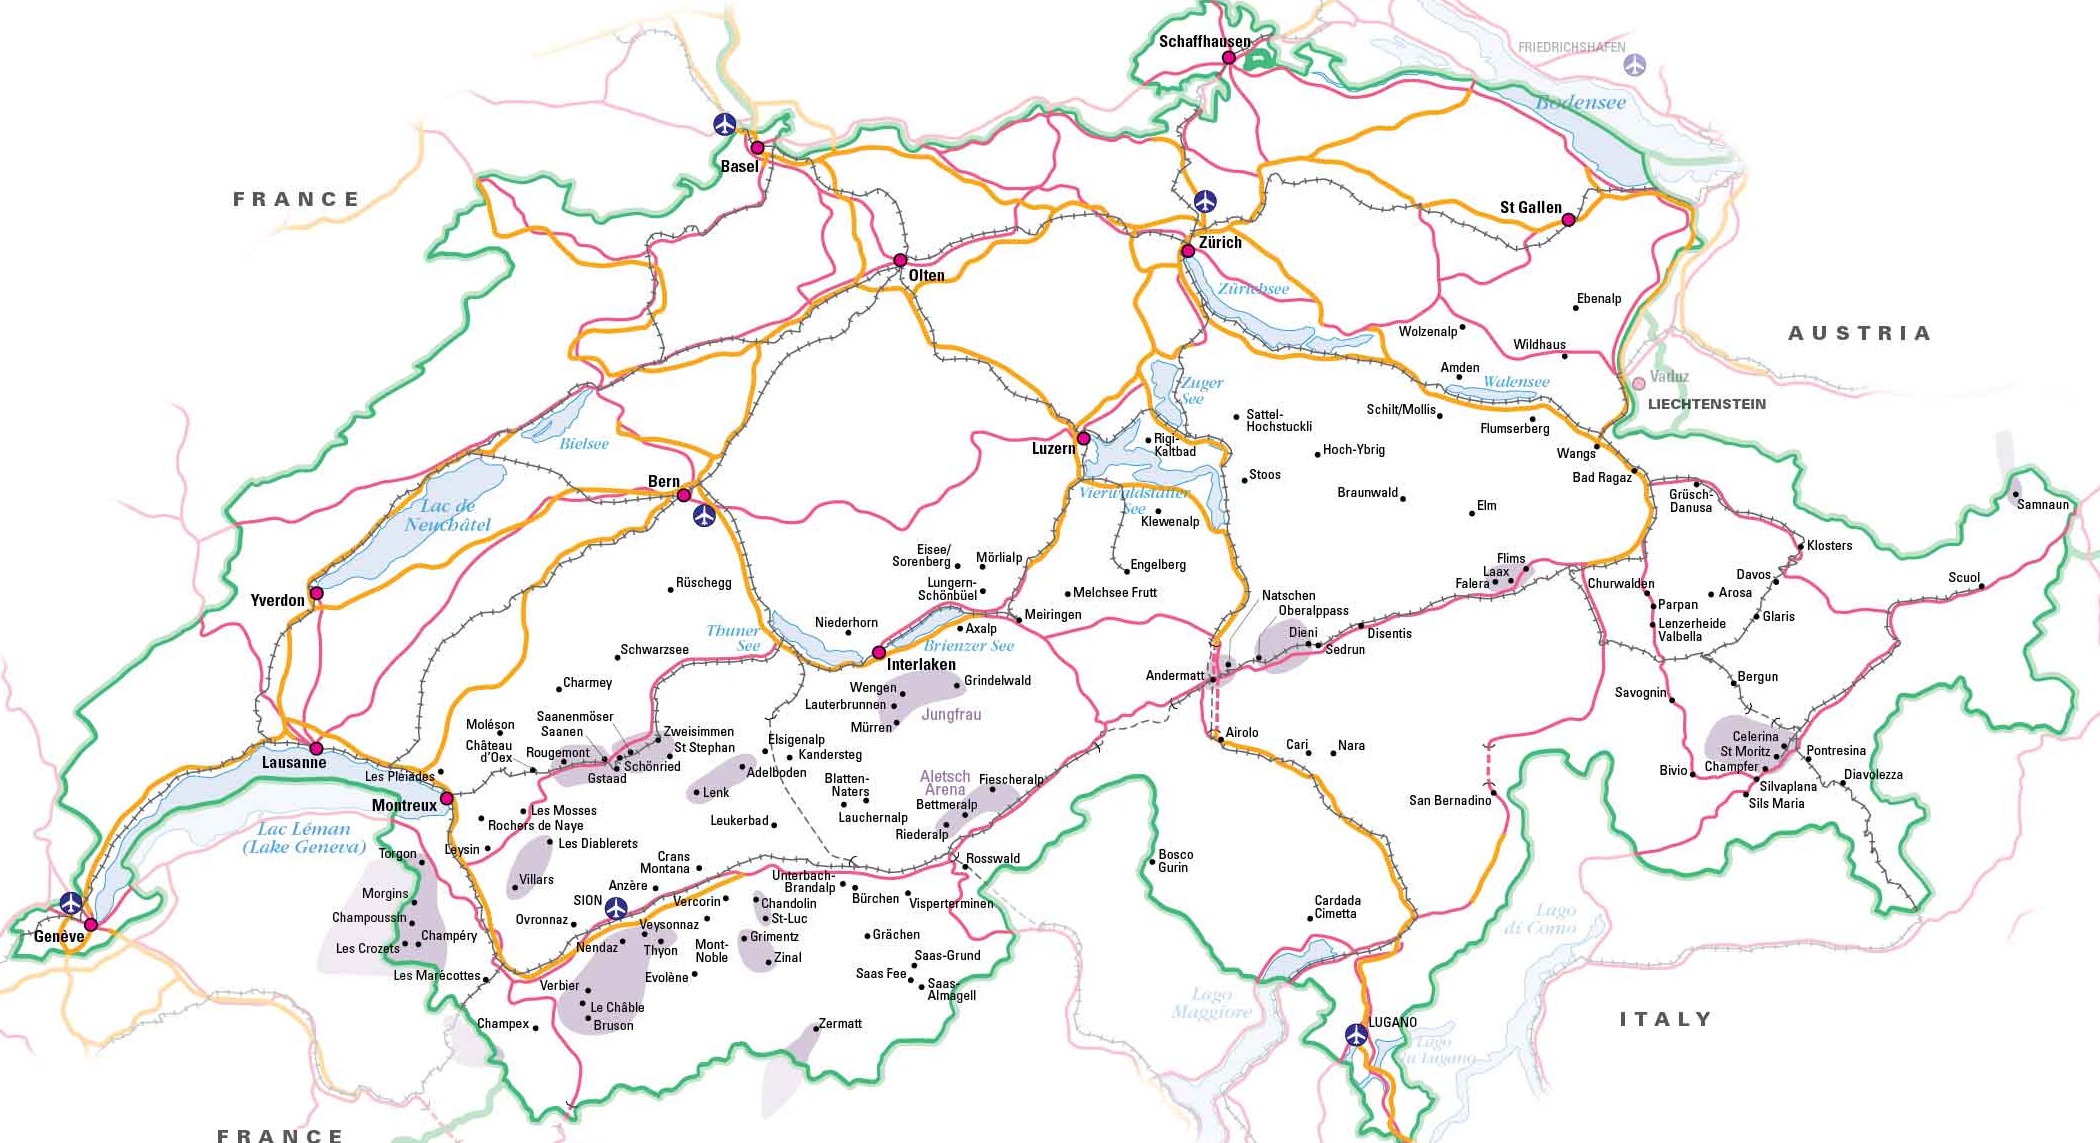 Road map of Switzerland